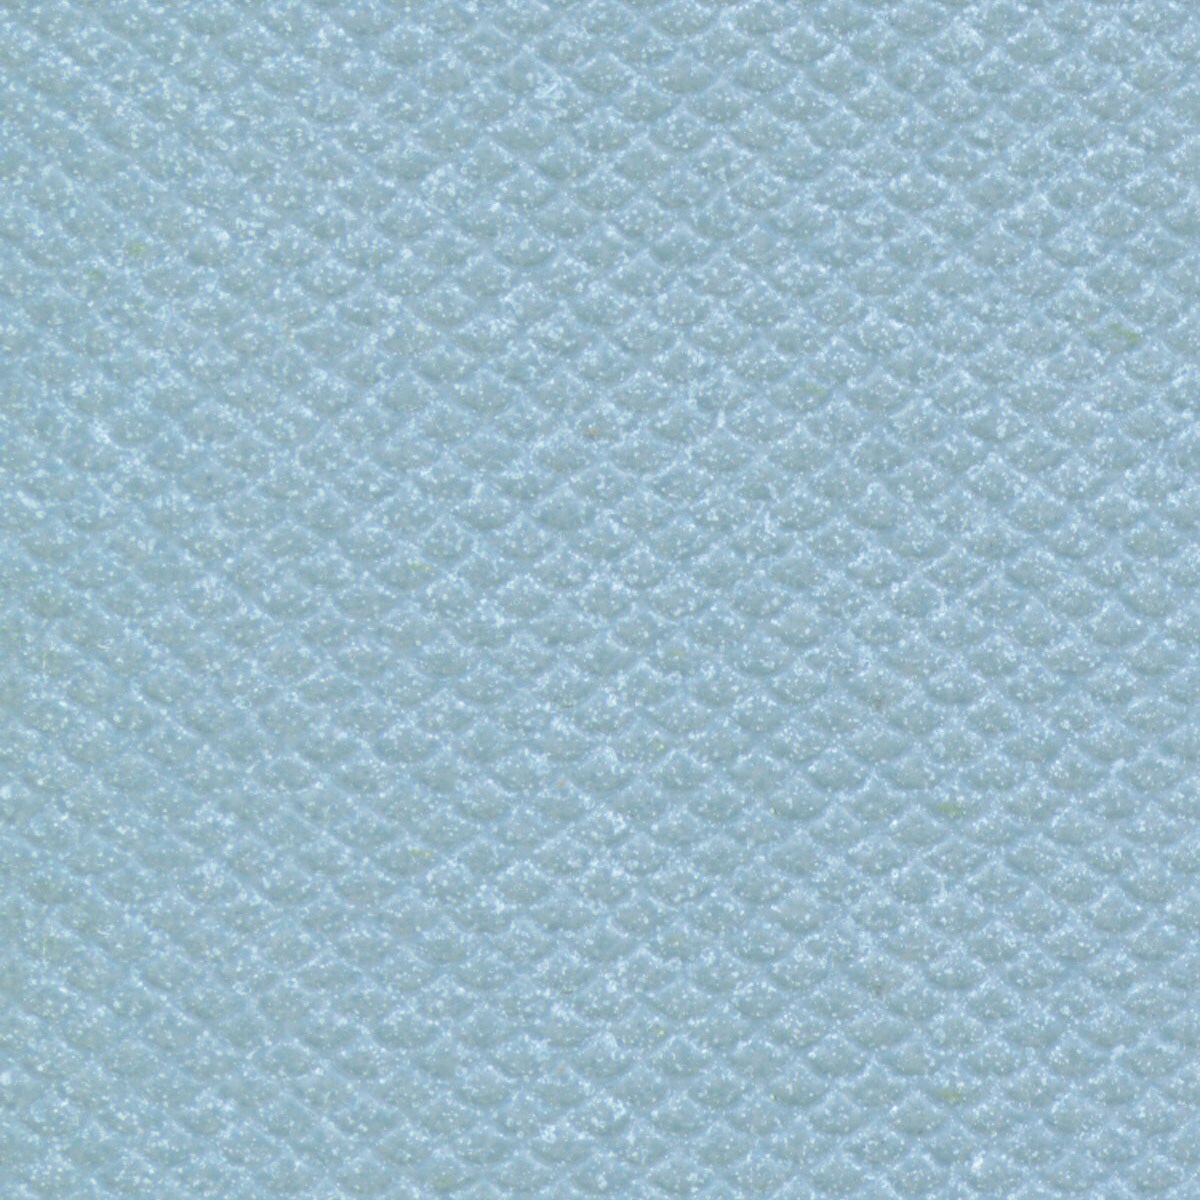 Plastruct Patterned Sheets, Scalloped Edge Tile,&#xA0;1:100 Scale